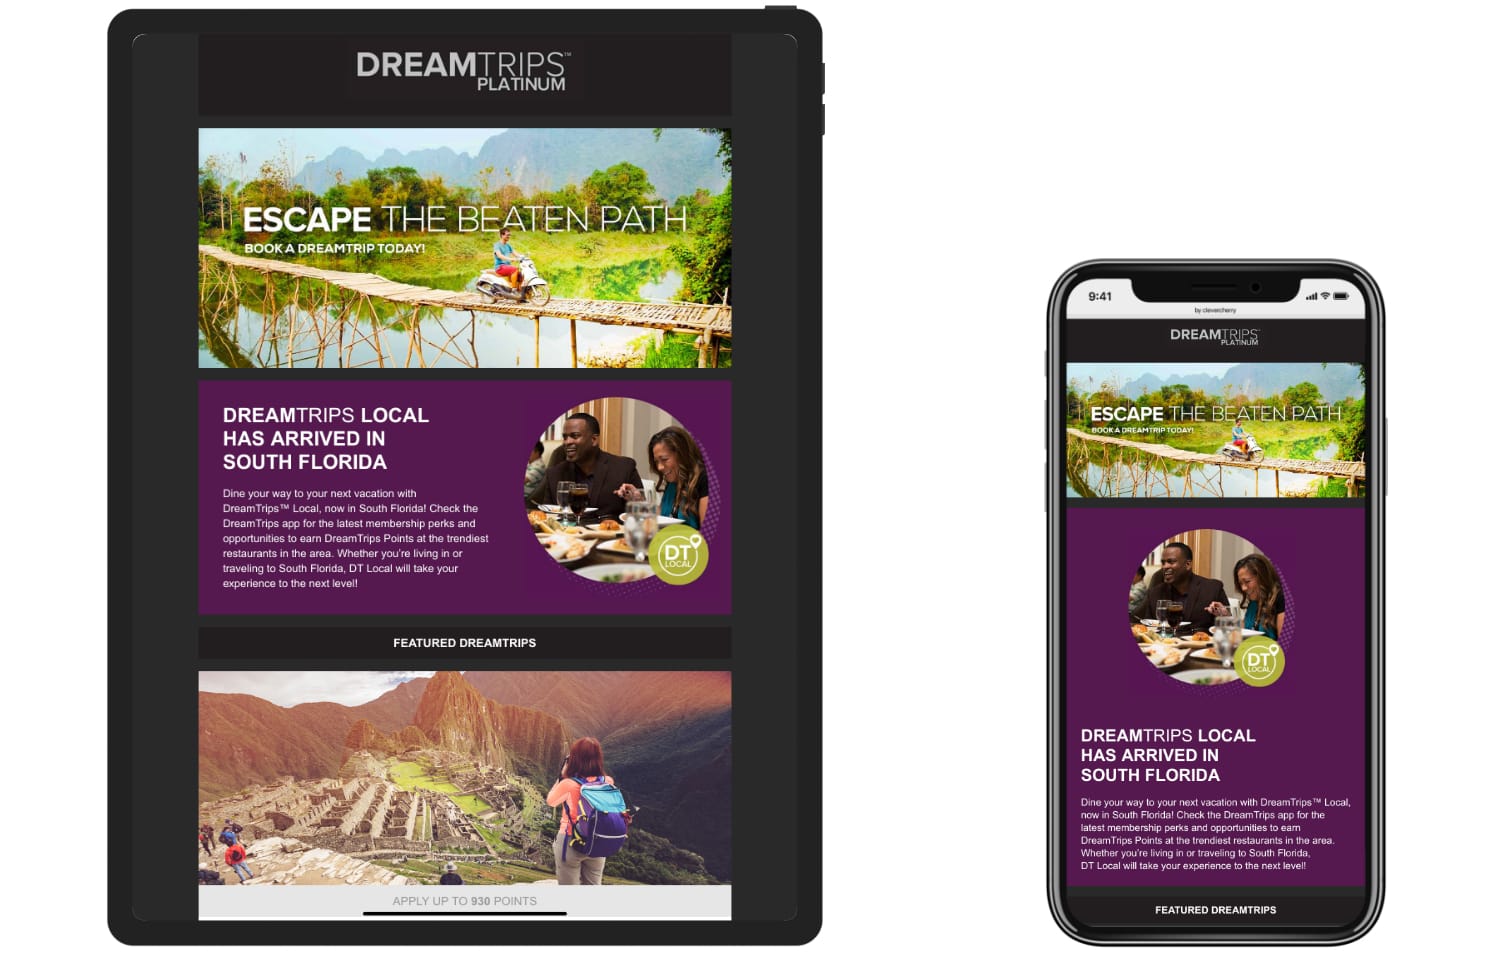 DreamTrips Platinum Membership E-mail